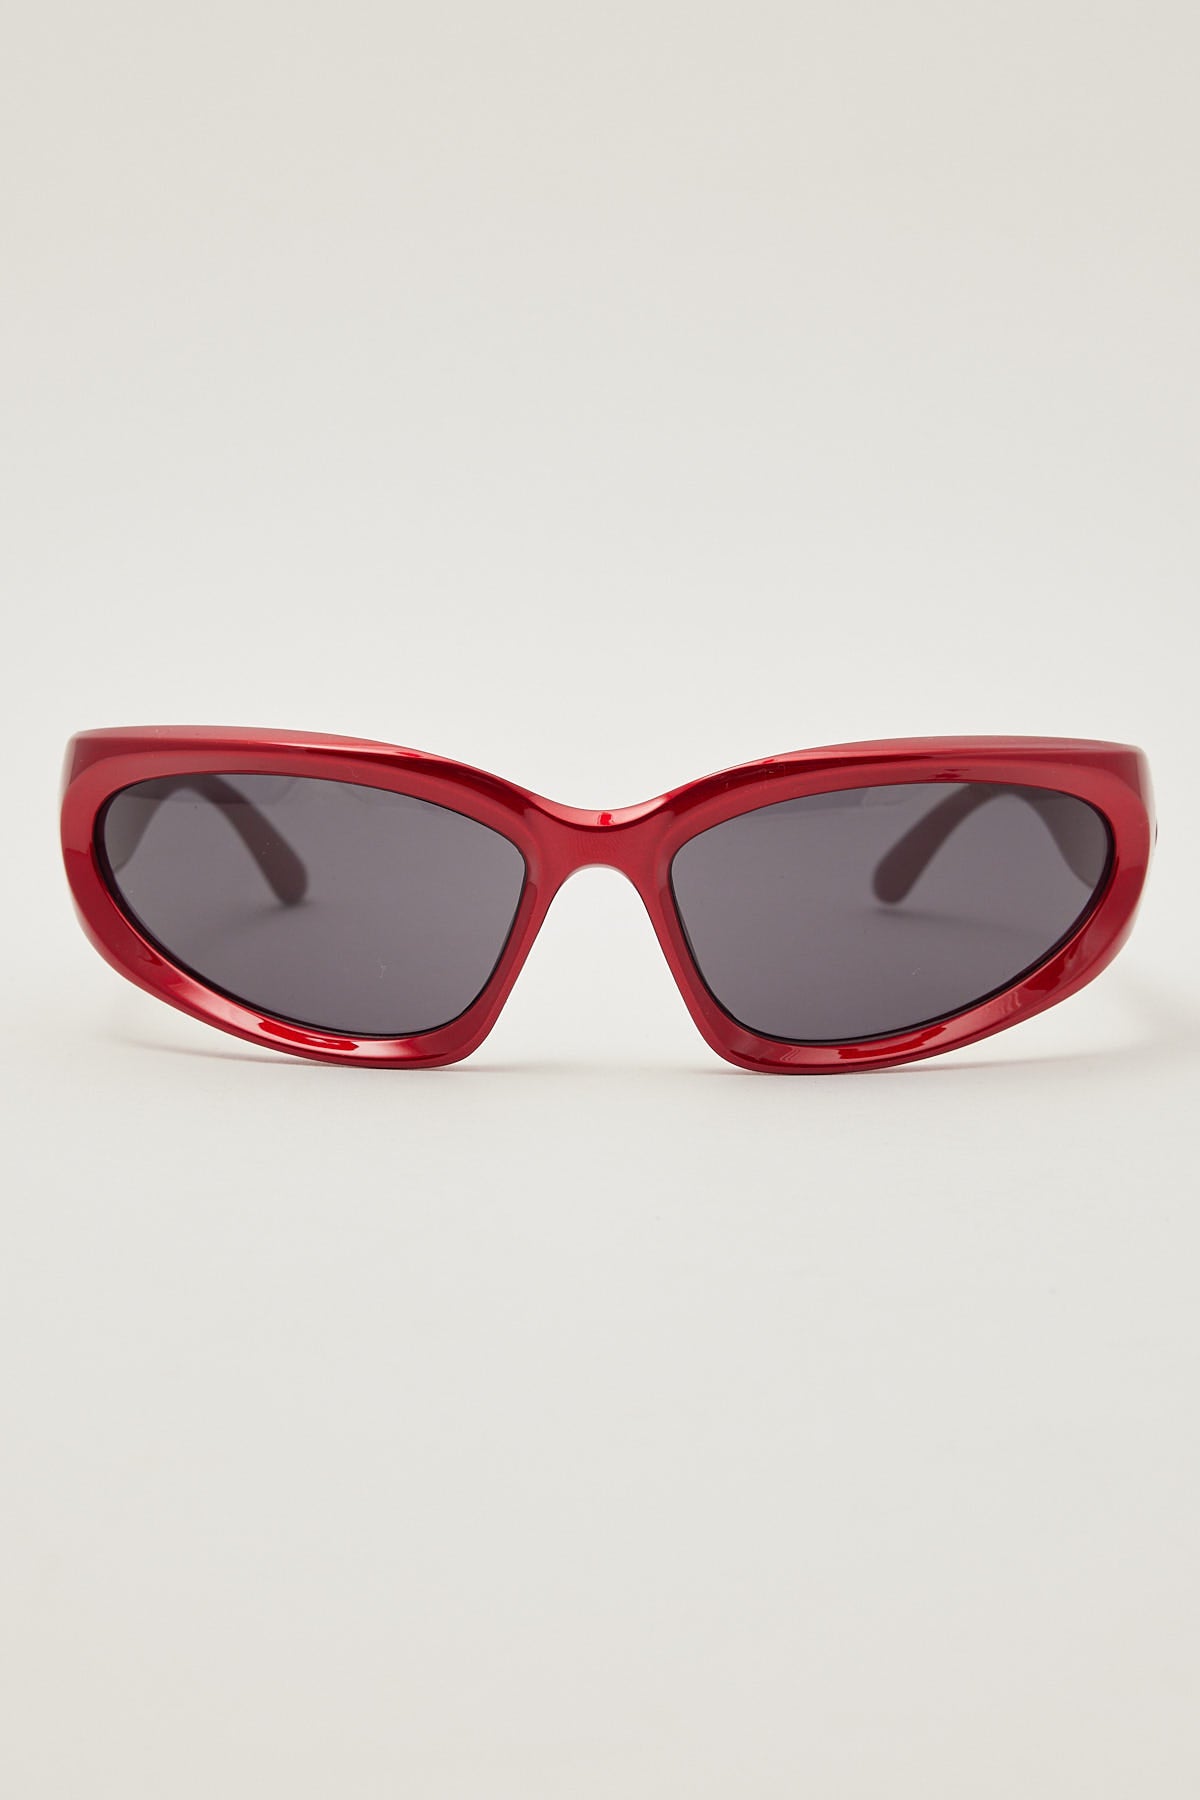 Angels Whisper Future Race Sunglasses Red – Universal Store